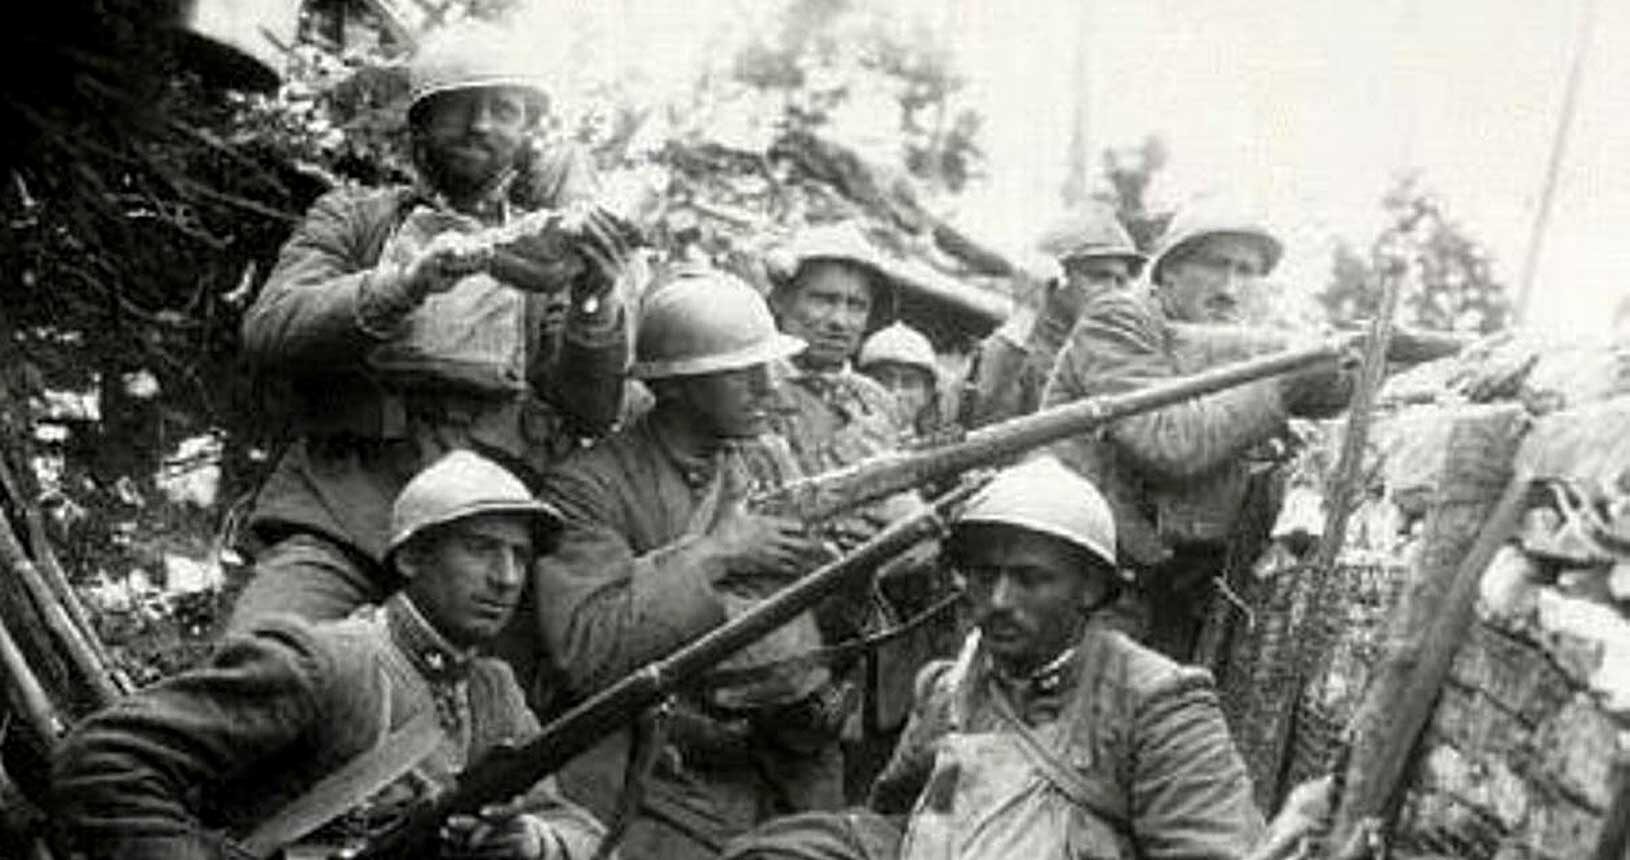 Italienische Soldaten im Schützengraben, ca. 1918 (Public Domain)